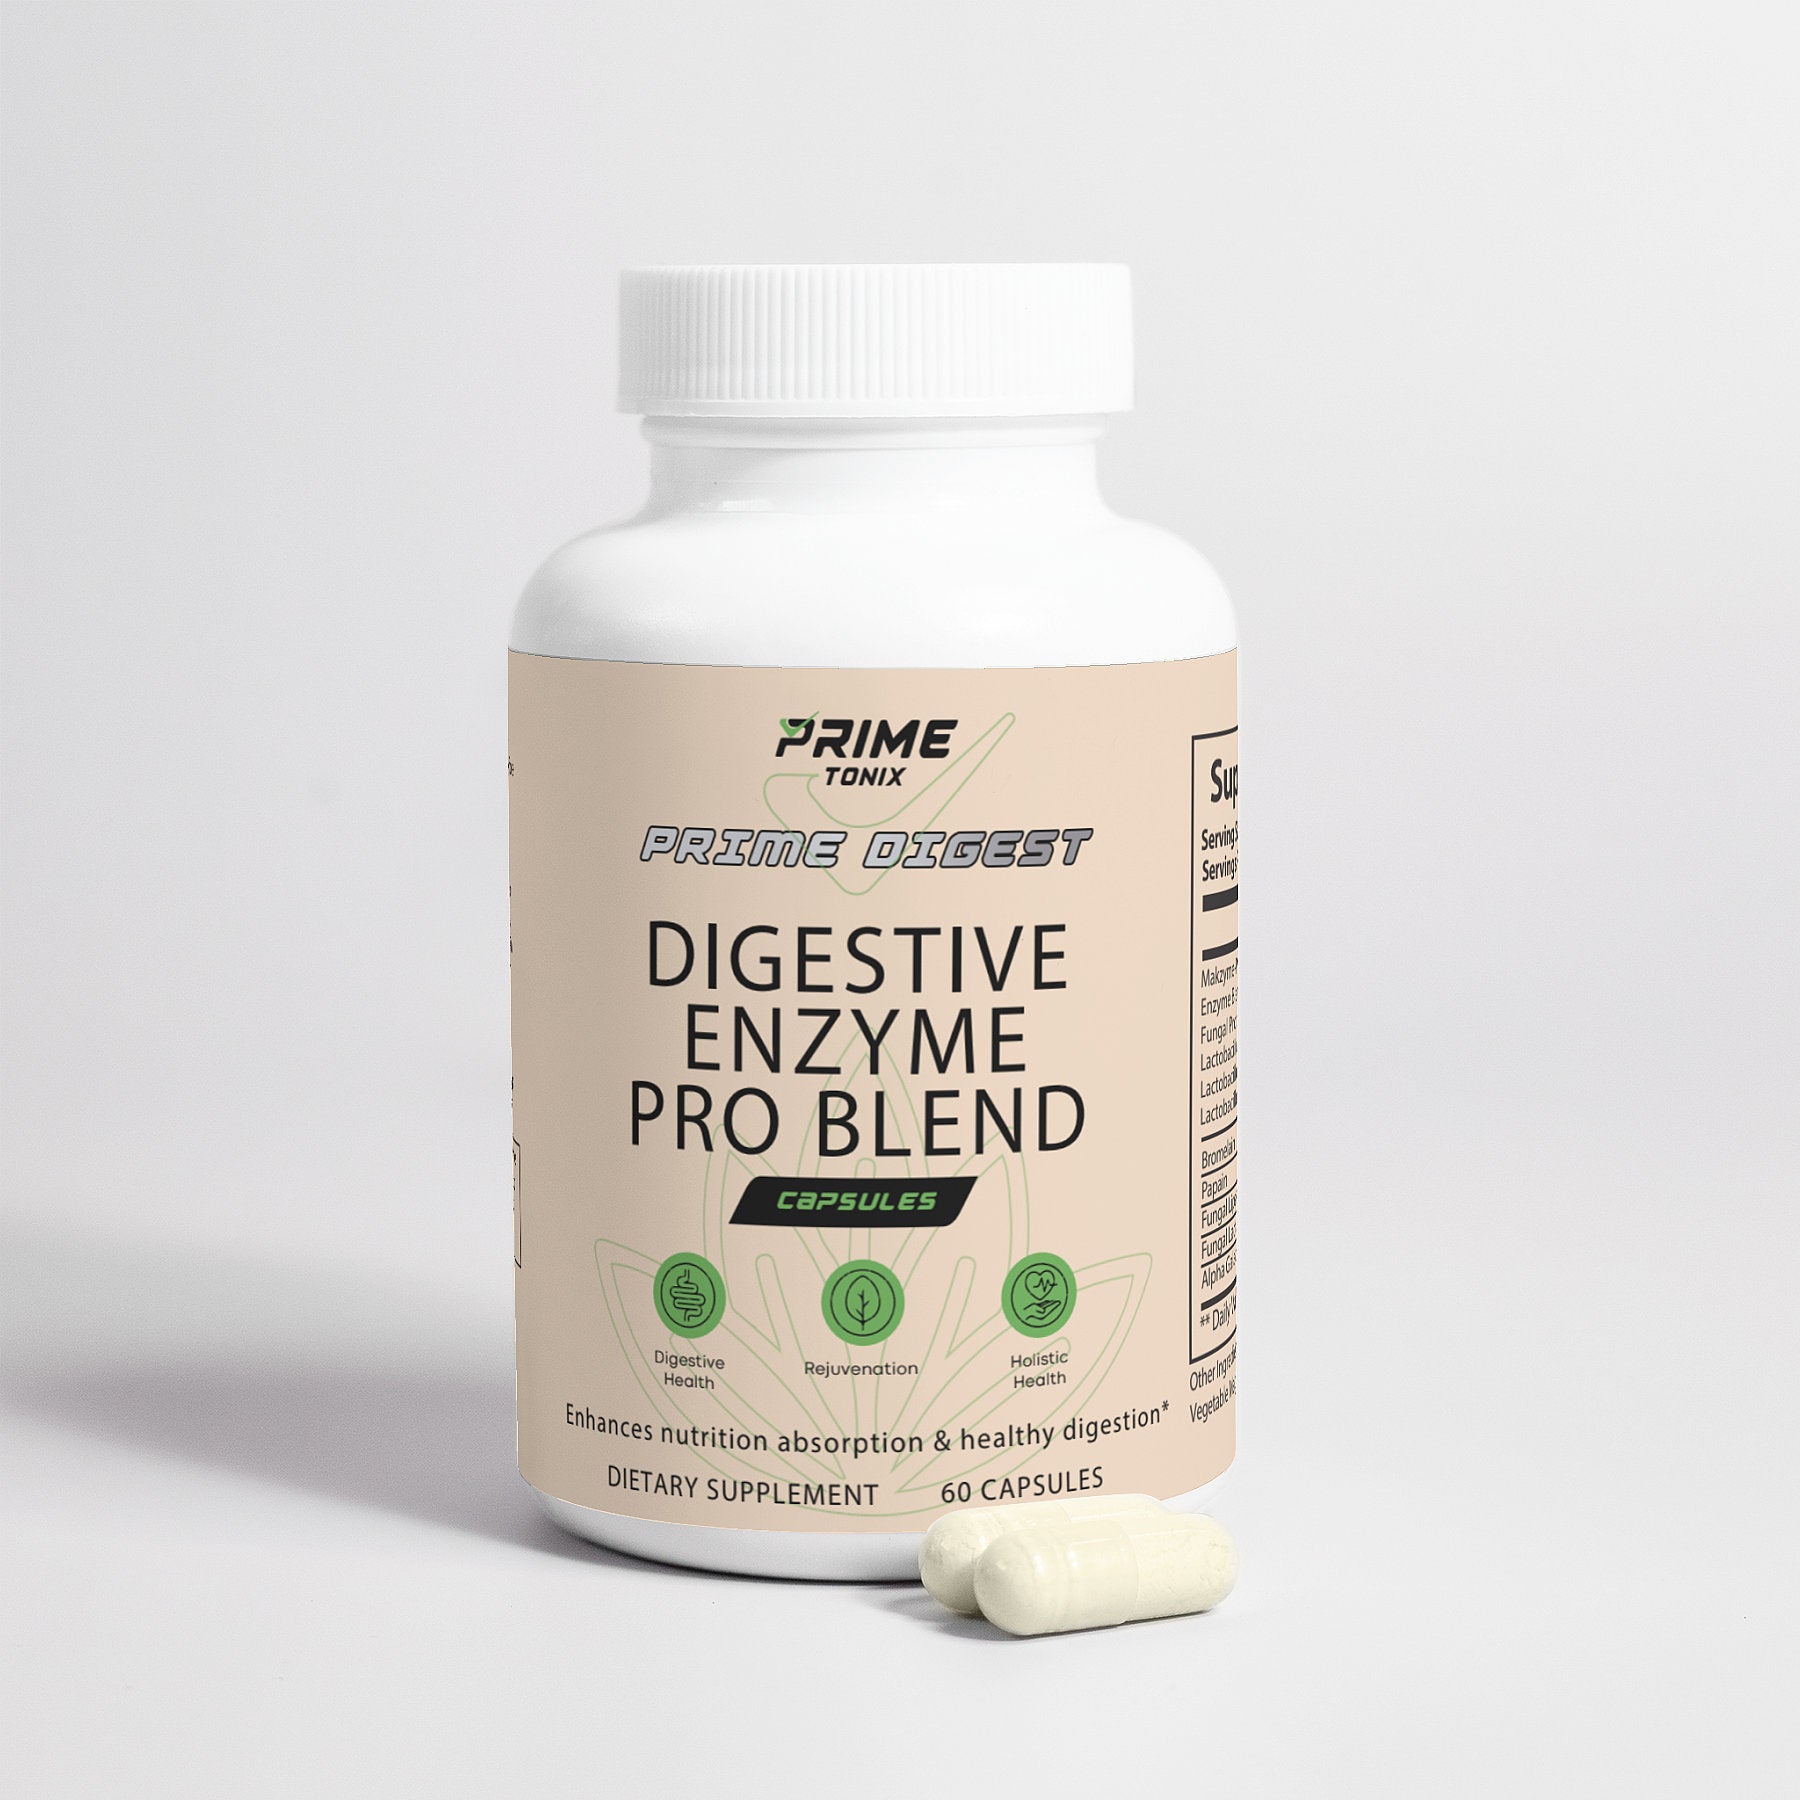 Prime Digestive Enzyme Pro Blend